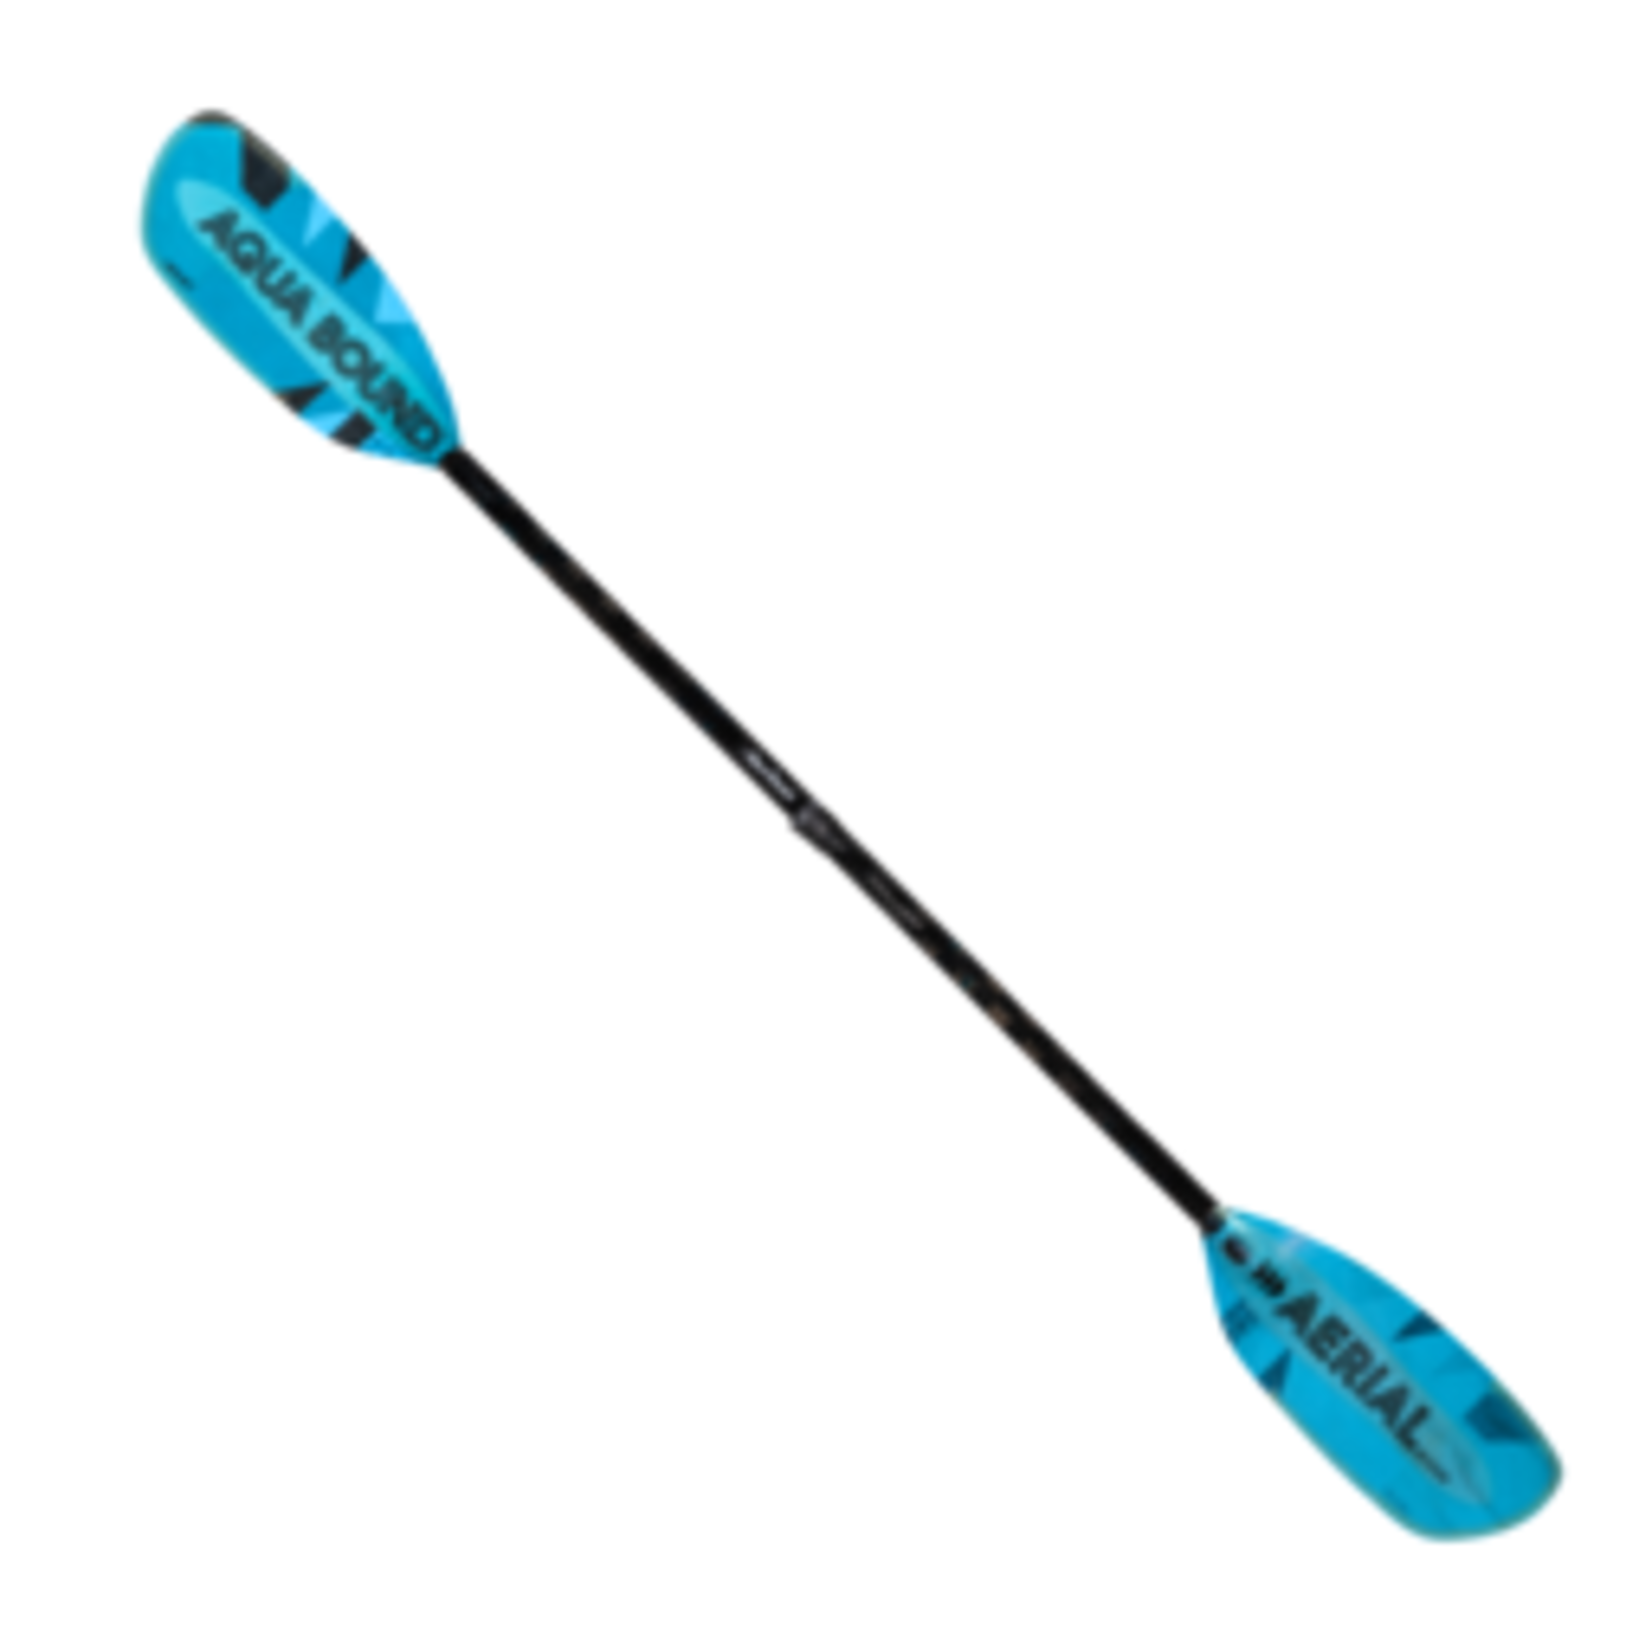 Aqua Bound Aqua Bound Aerial Minor Fiberglass 2-Piece Versa-Lok Straight Shaft Kayak Paddle